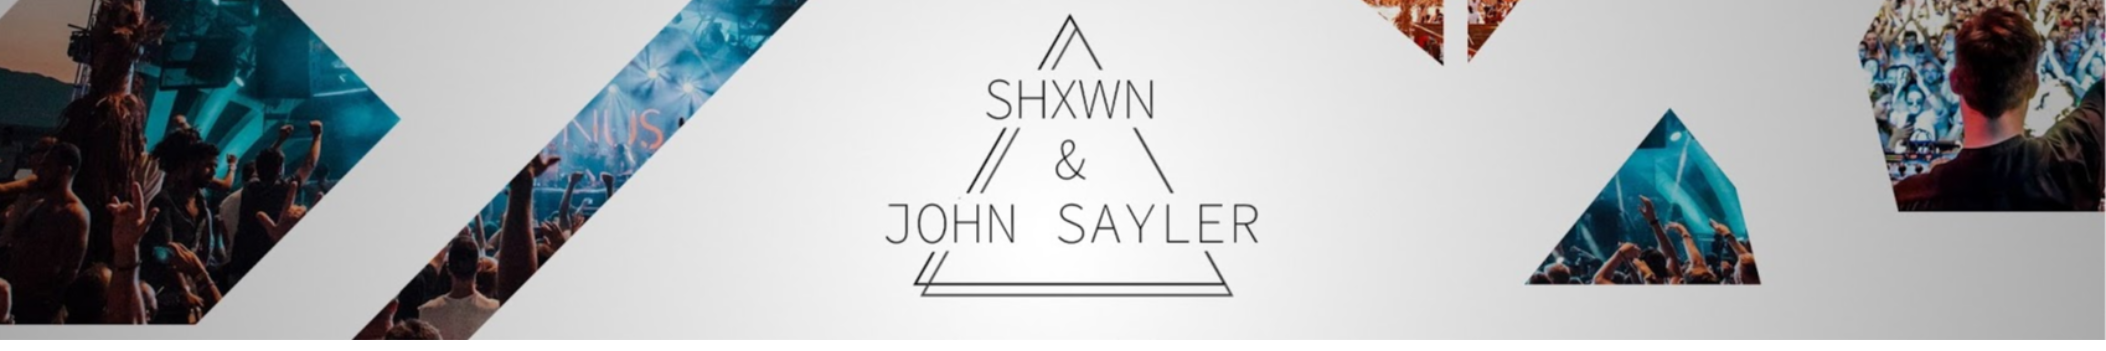 John Sayler & SHVWN